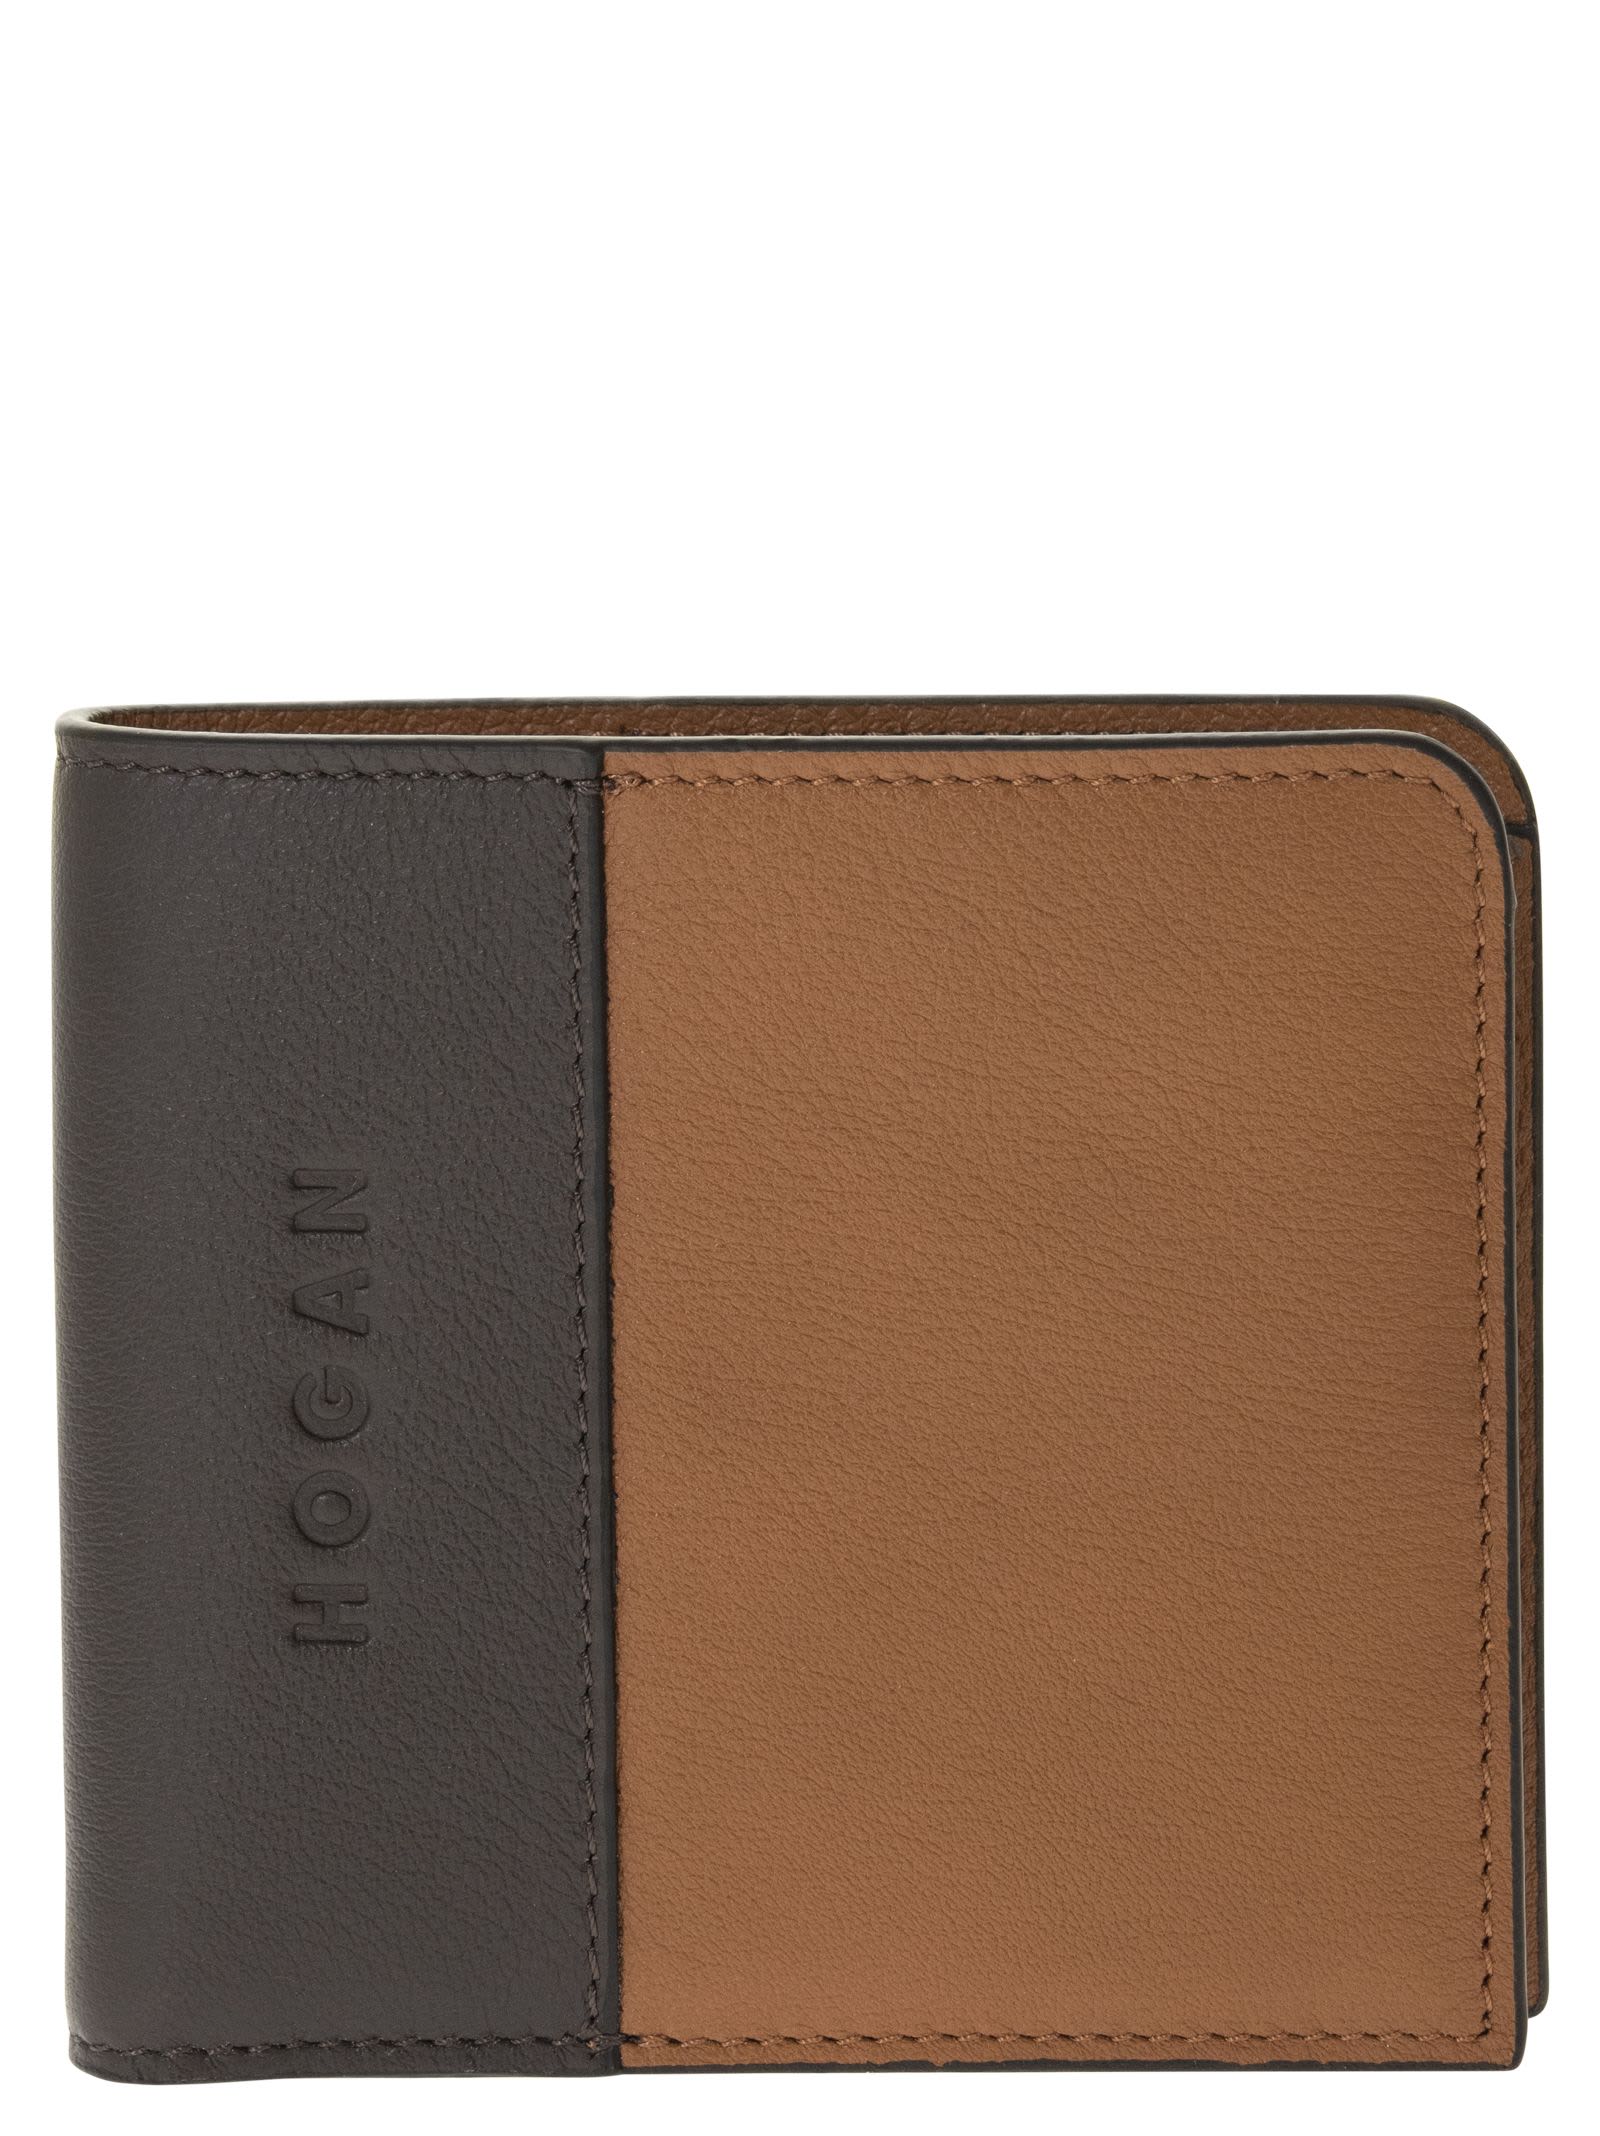 Hogan Leather Wallet